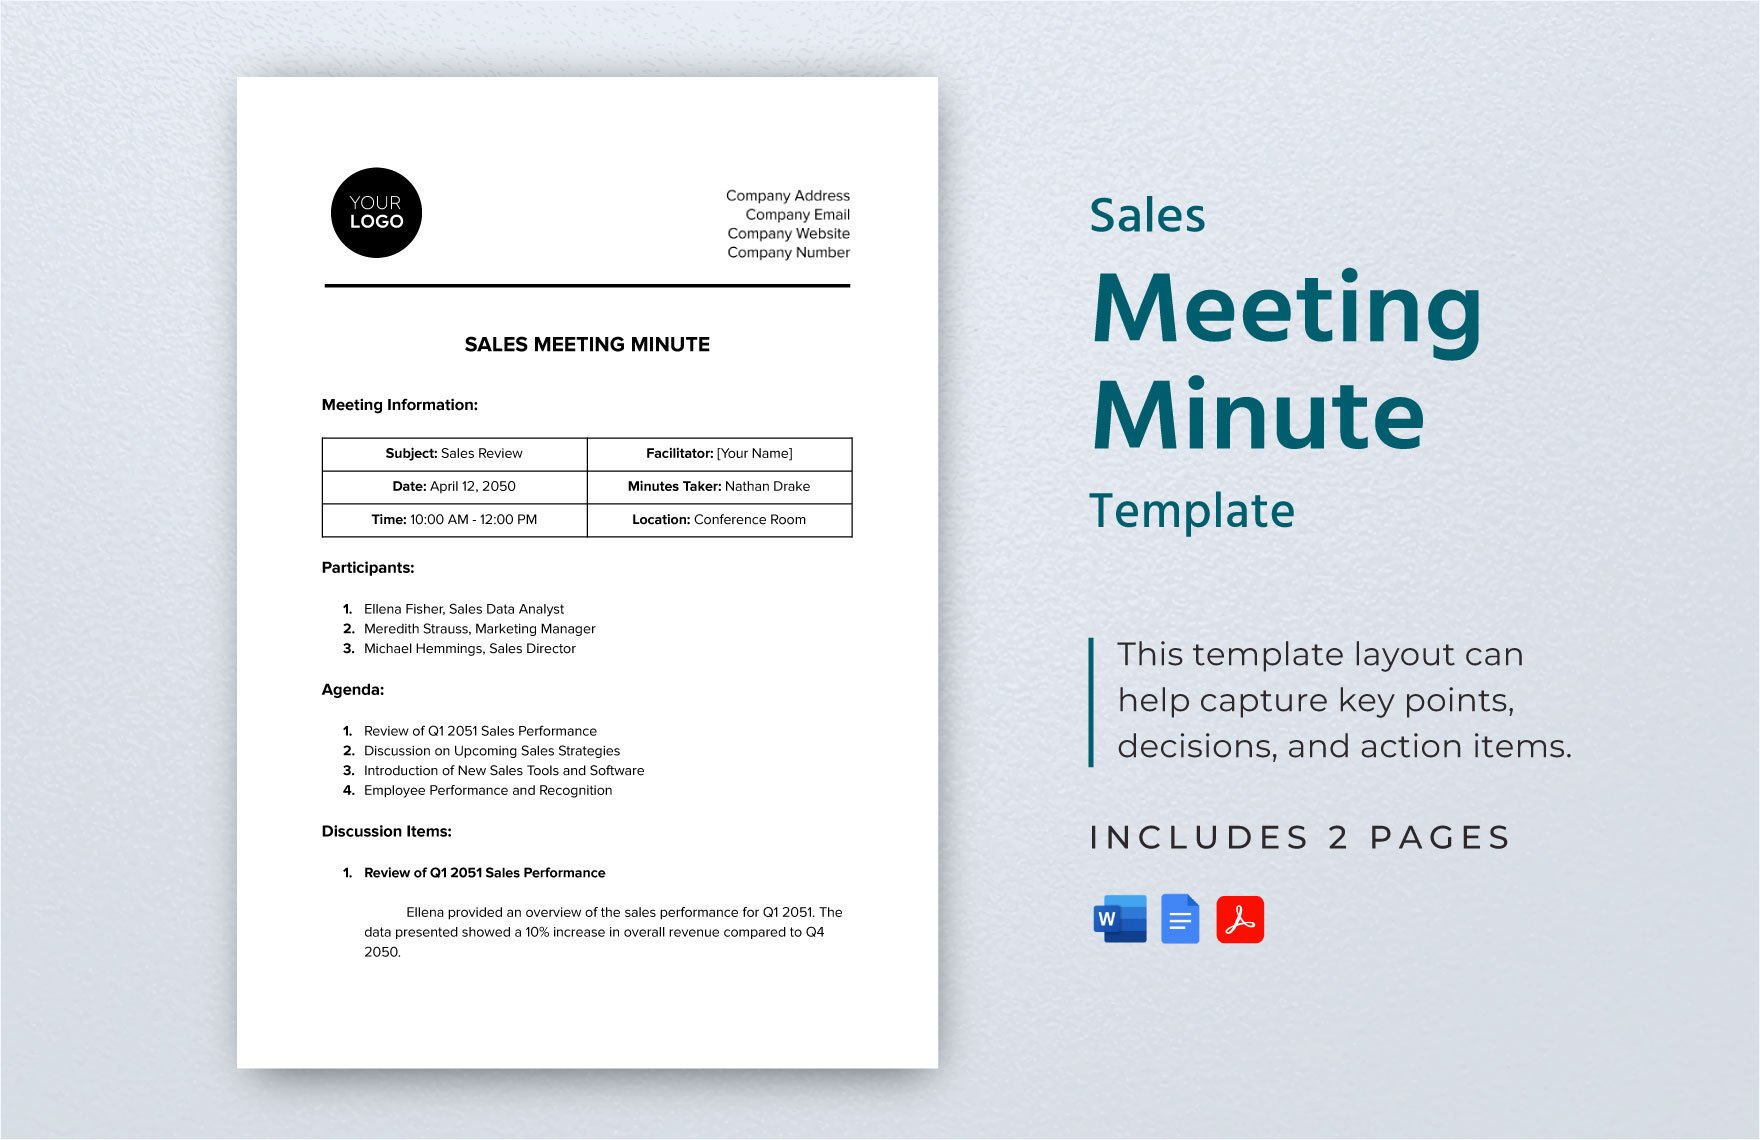 Sales Meeting Minute Template in Word, Google Docs, PDF